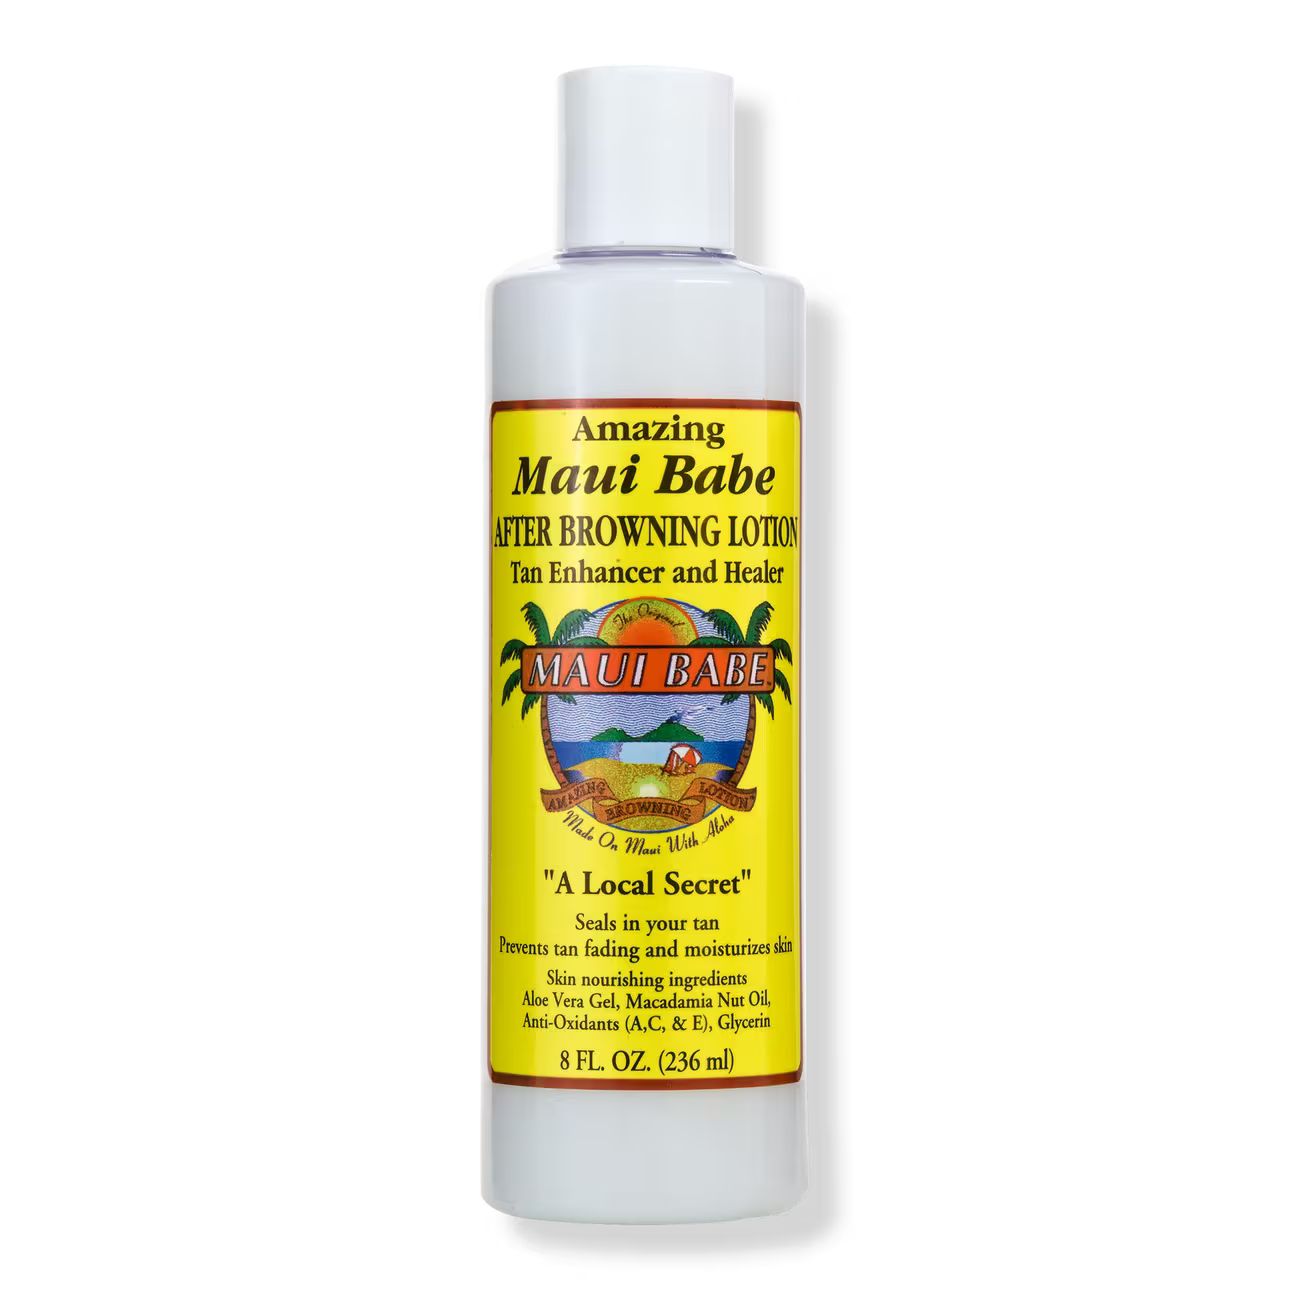 Maui BabeAfter Browning Lotion Tan Enhancer and Healer | Ulta